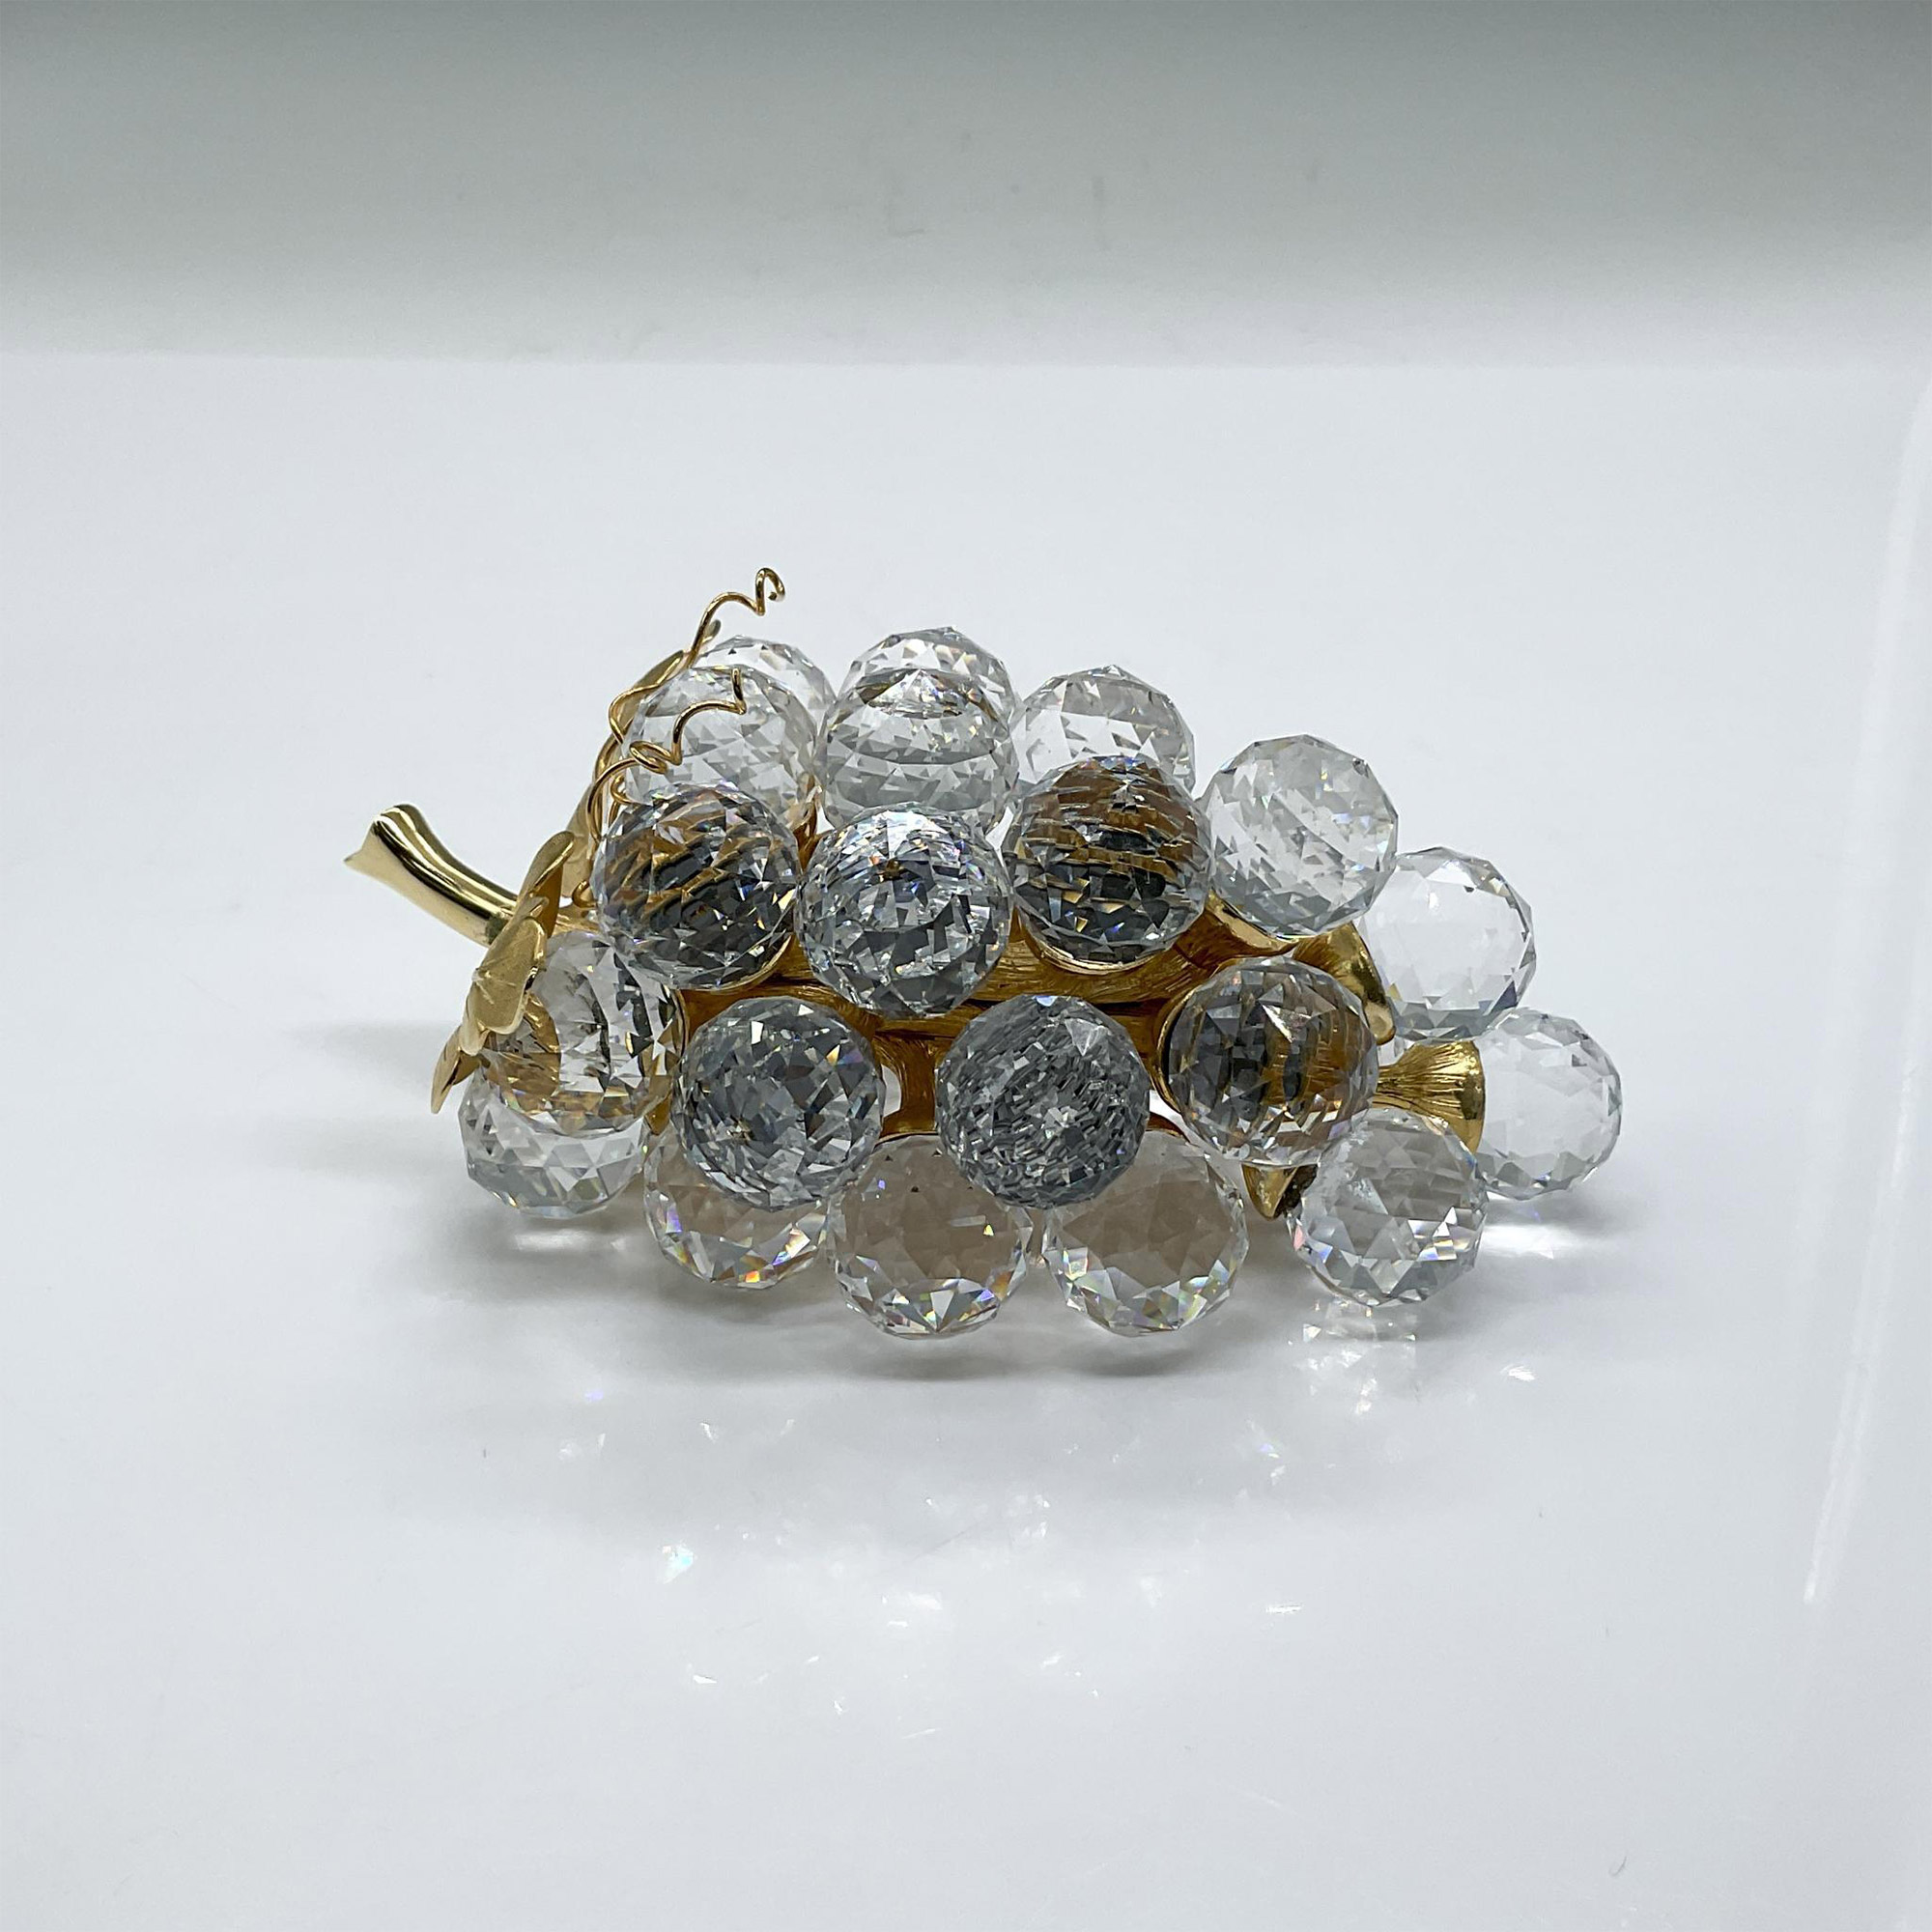 Swarovski Crystal Figurine, Grapes, Medium - Image 3 of 4